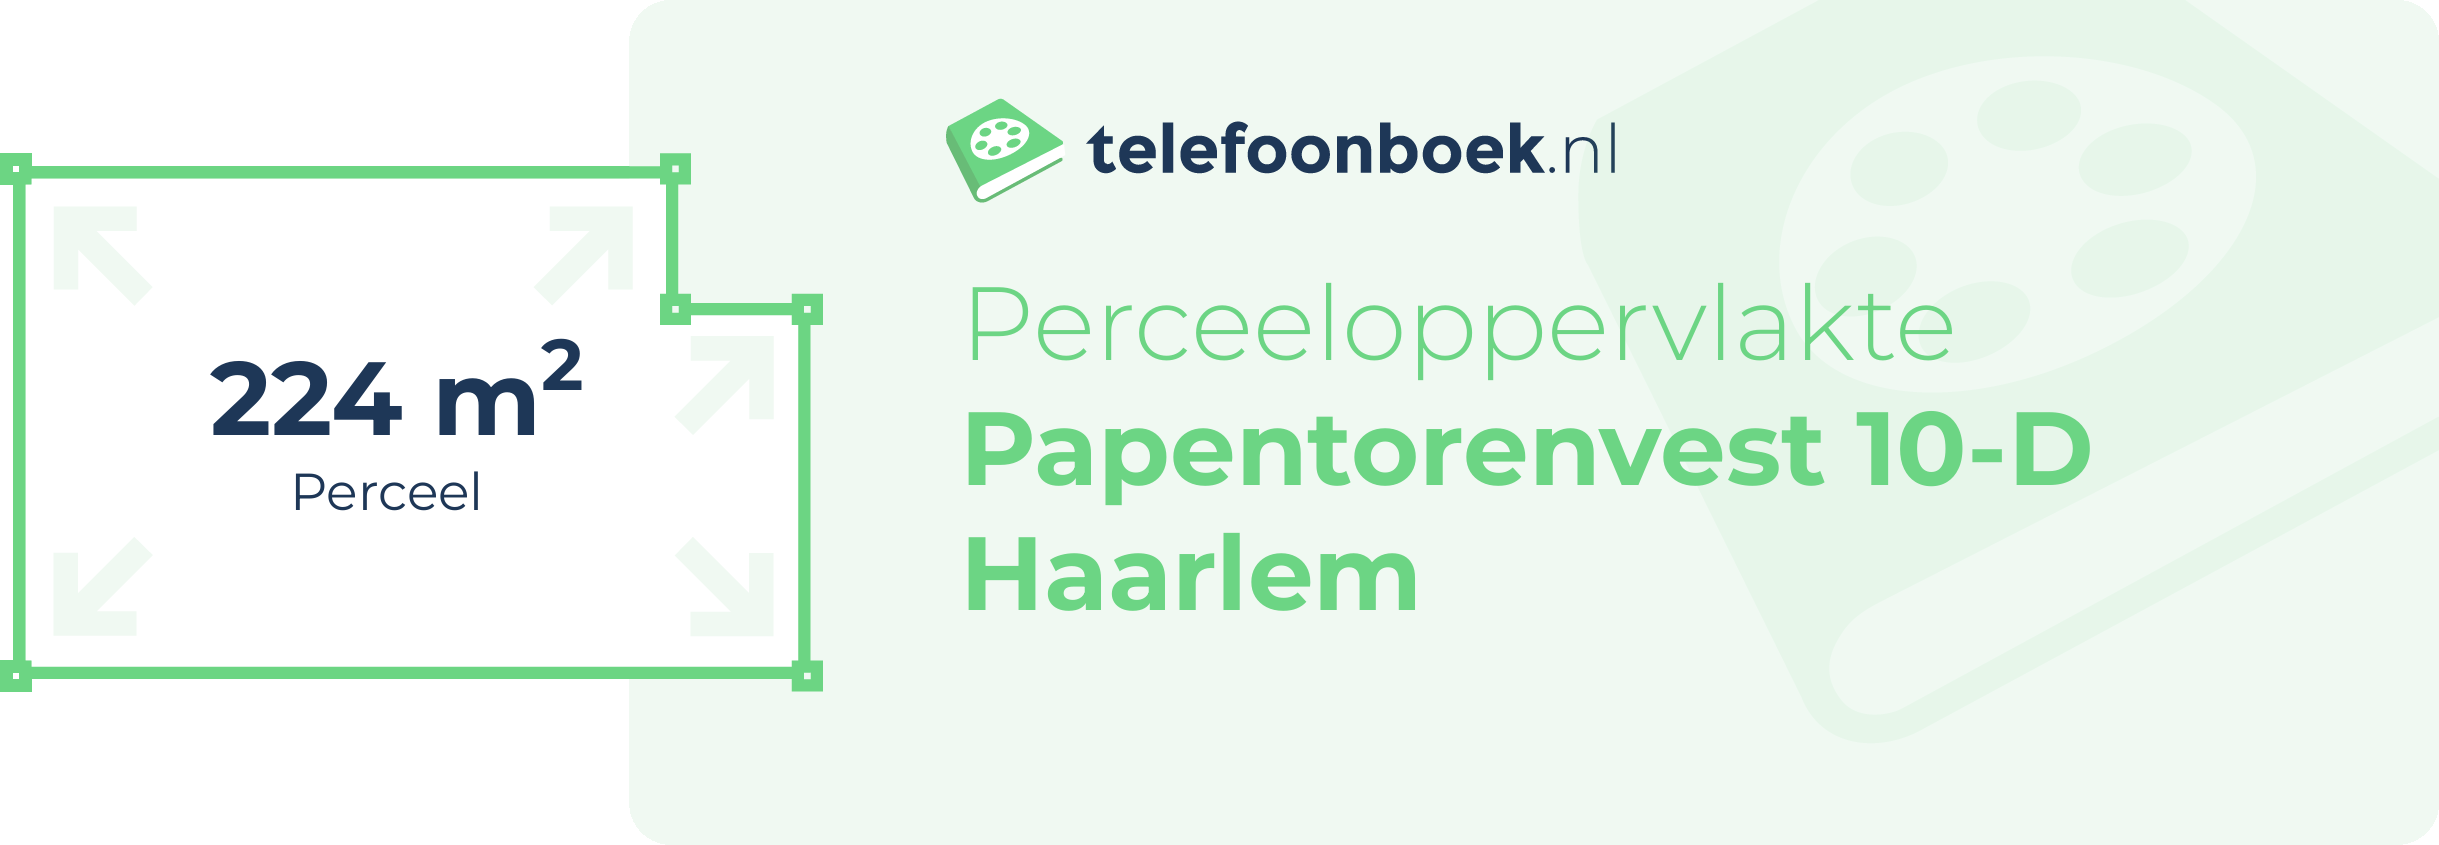 Perceeloppervlakte Papentorenvest 10-D Haarlem